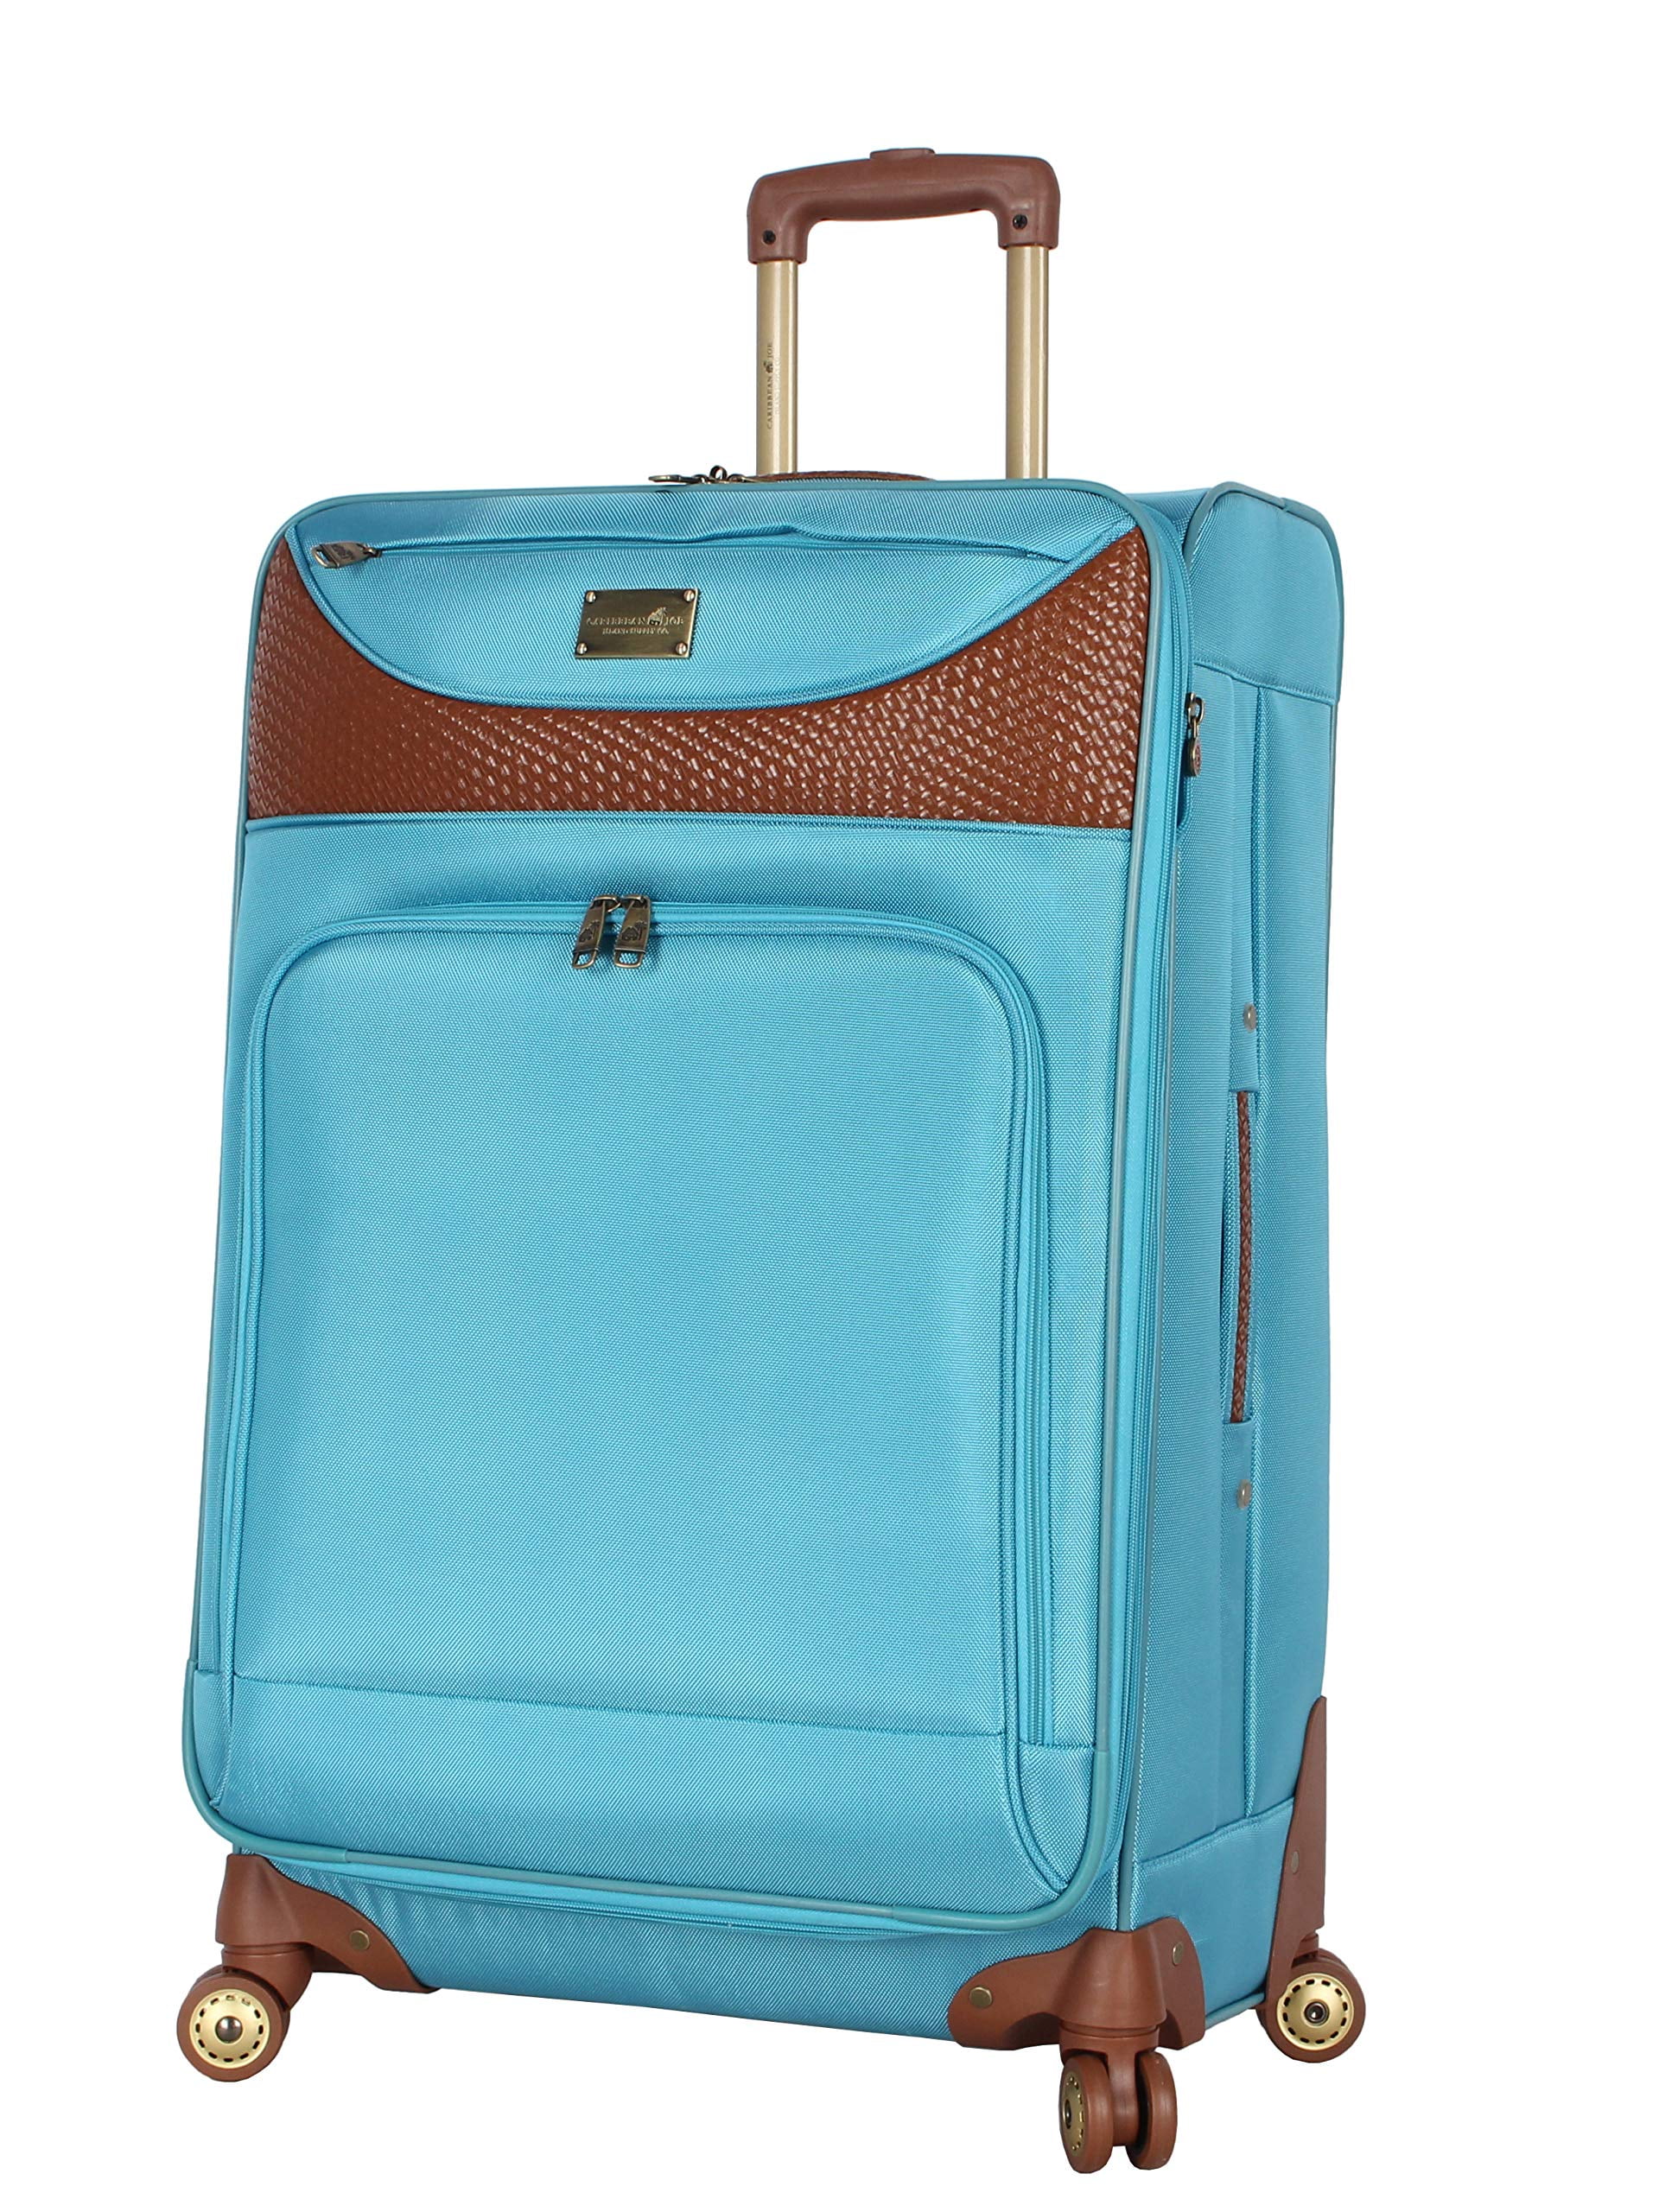 Caribbean Joe Luggage Castaway Large Expandable Suitcase With Spinner Wheels Royal Blue 